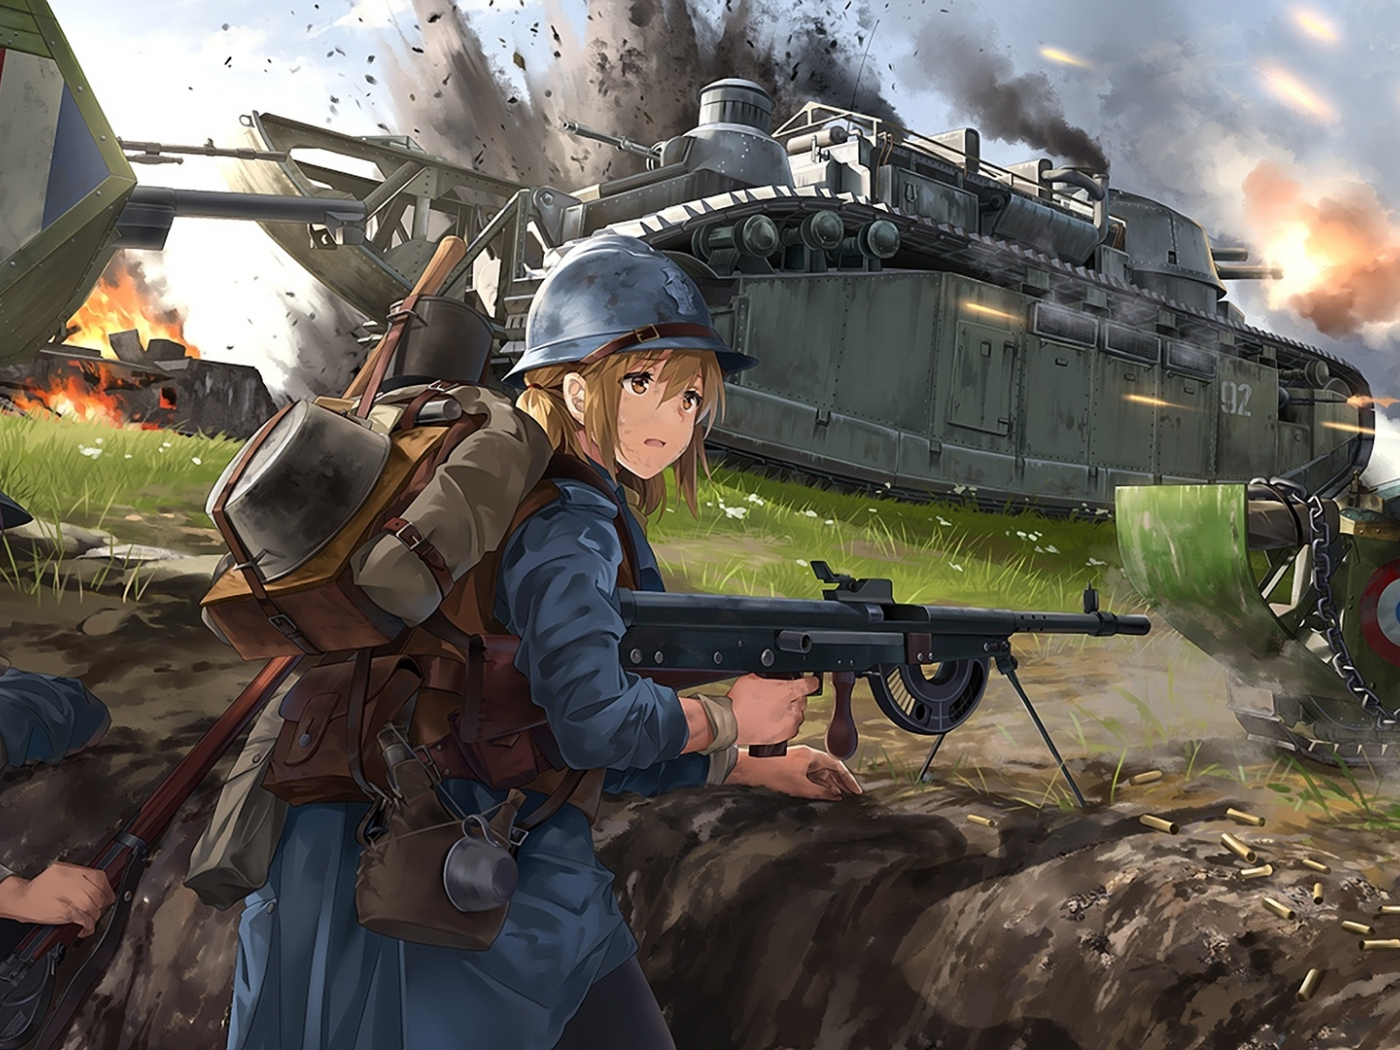 Anime v2 Anime art style large heavy military tank by krogher22 on  DeviantArt